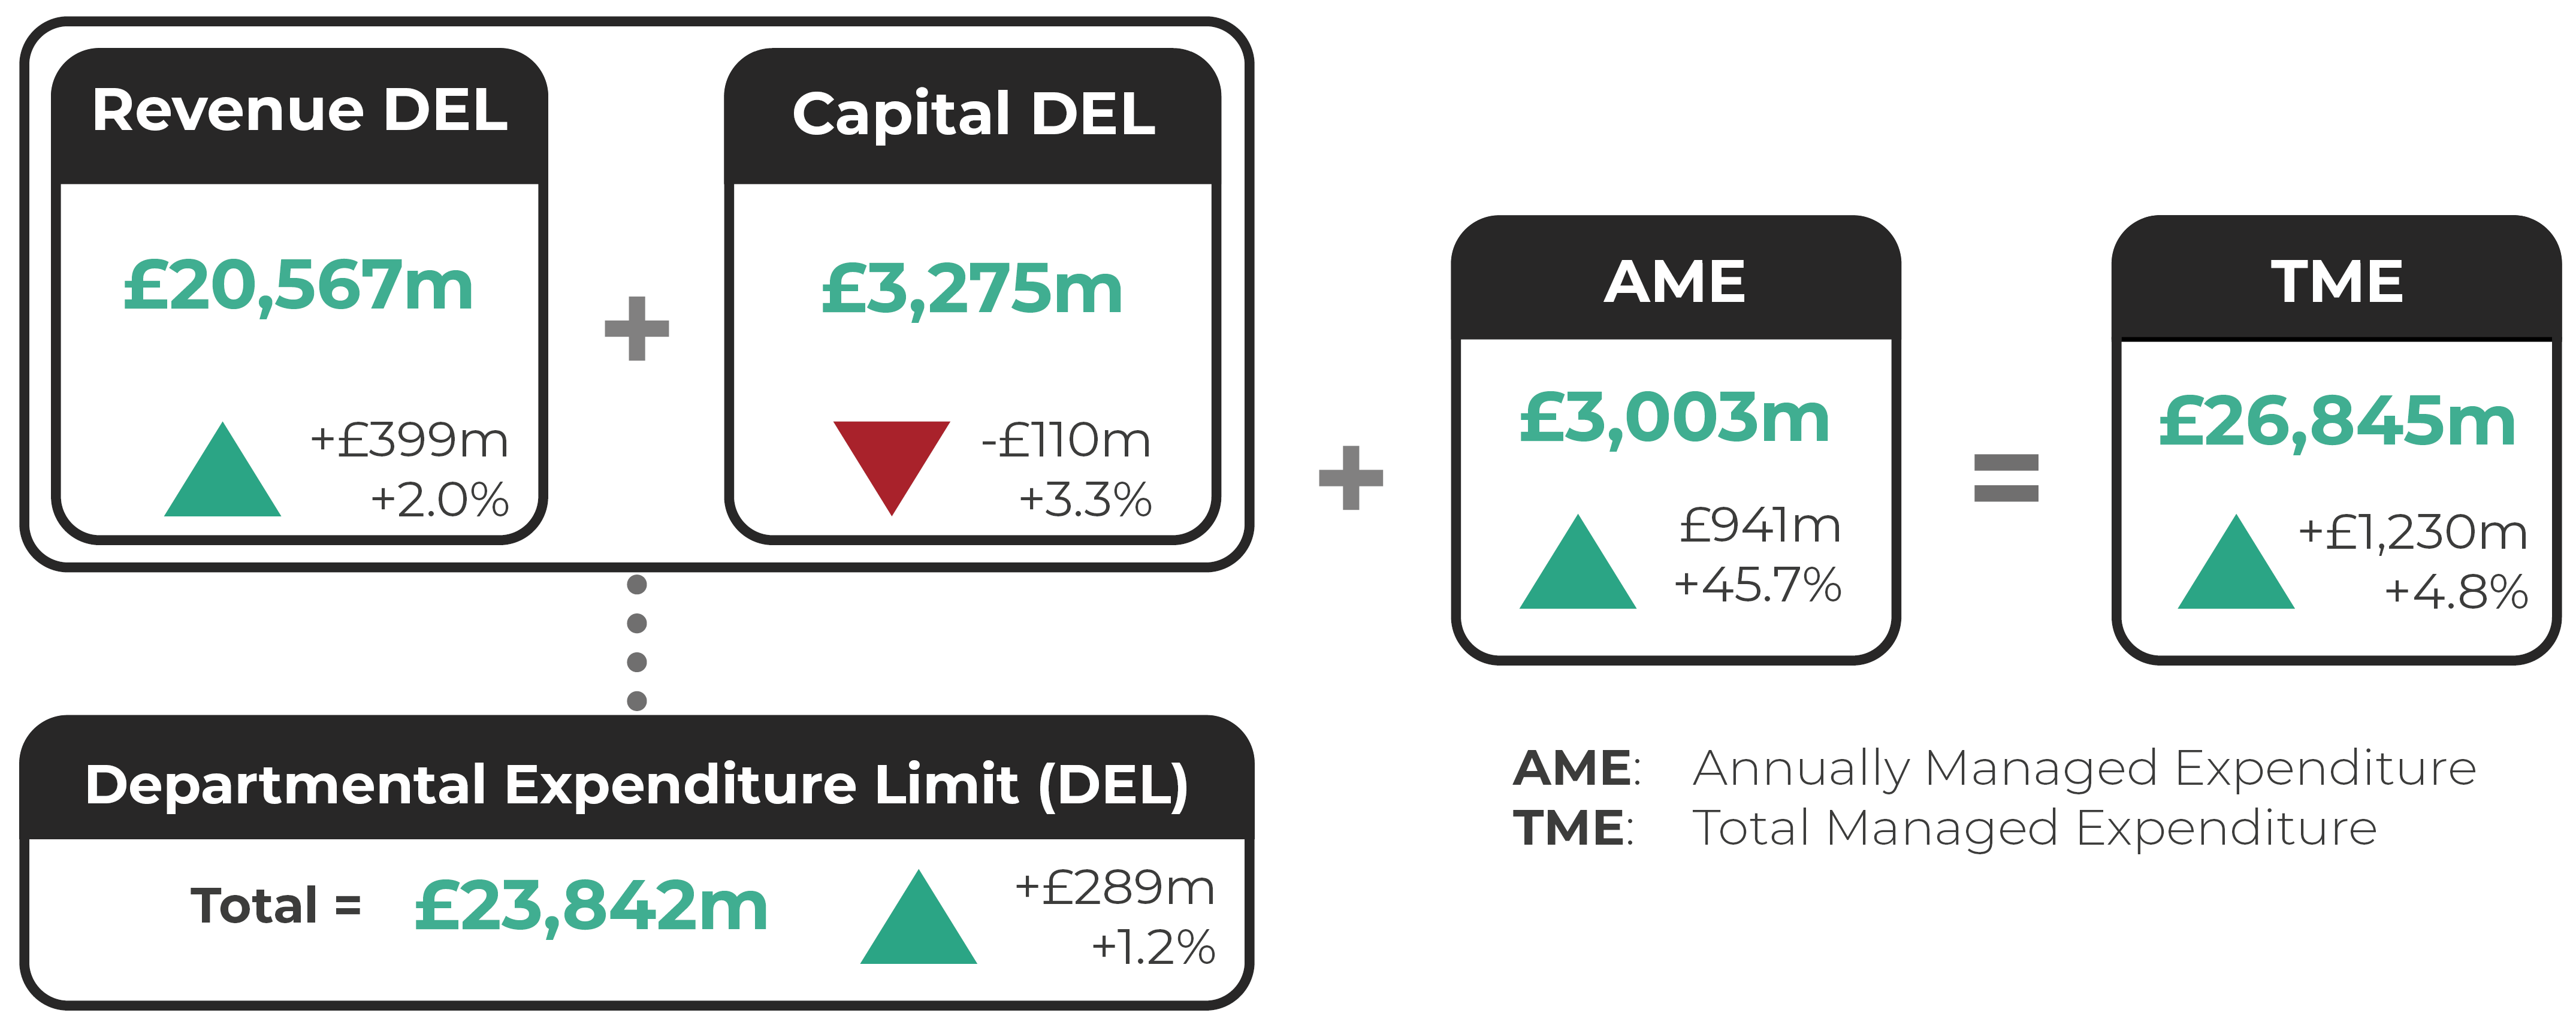 Revenue Departmental Expenditure Limit (DEL): £20,567m (up by £399m or 2.0%). Capital DEL: £3,275m (down by £110m or 3.3%). Total DEL: £23,842m (up by £289m or 1.2%). Annually Managed Expenditure (AME): £3,003m (up by £941m or 45.7%). Total Managed Expenditure (TME): £26,845m (up by £1,230m or 4.8%).